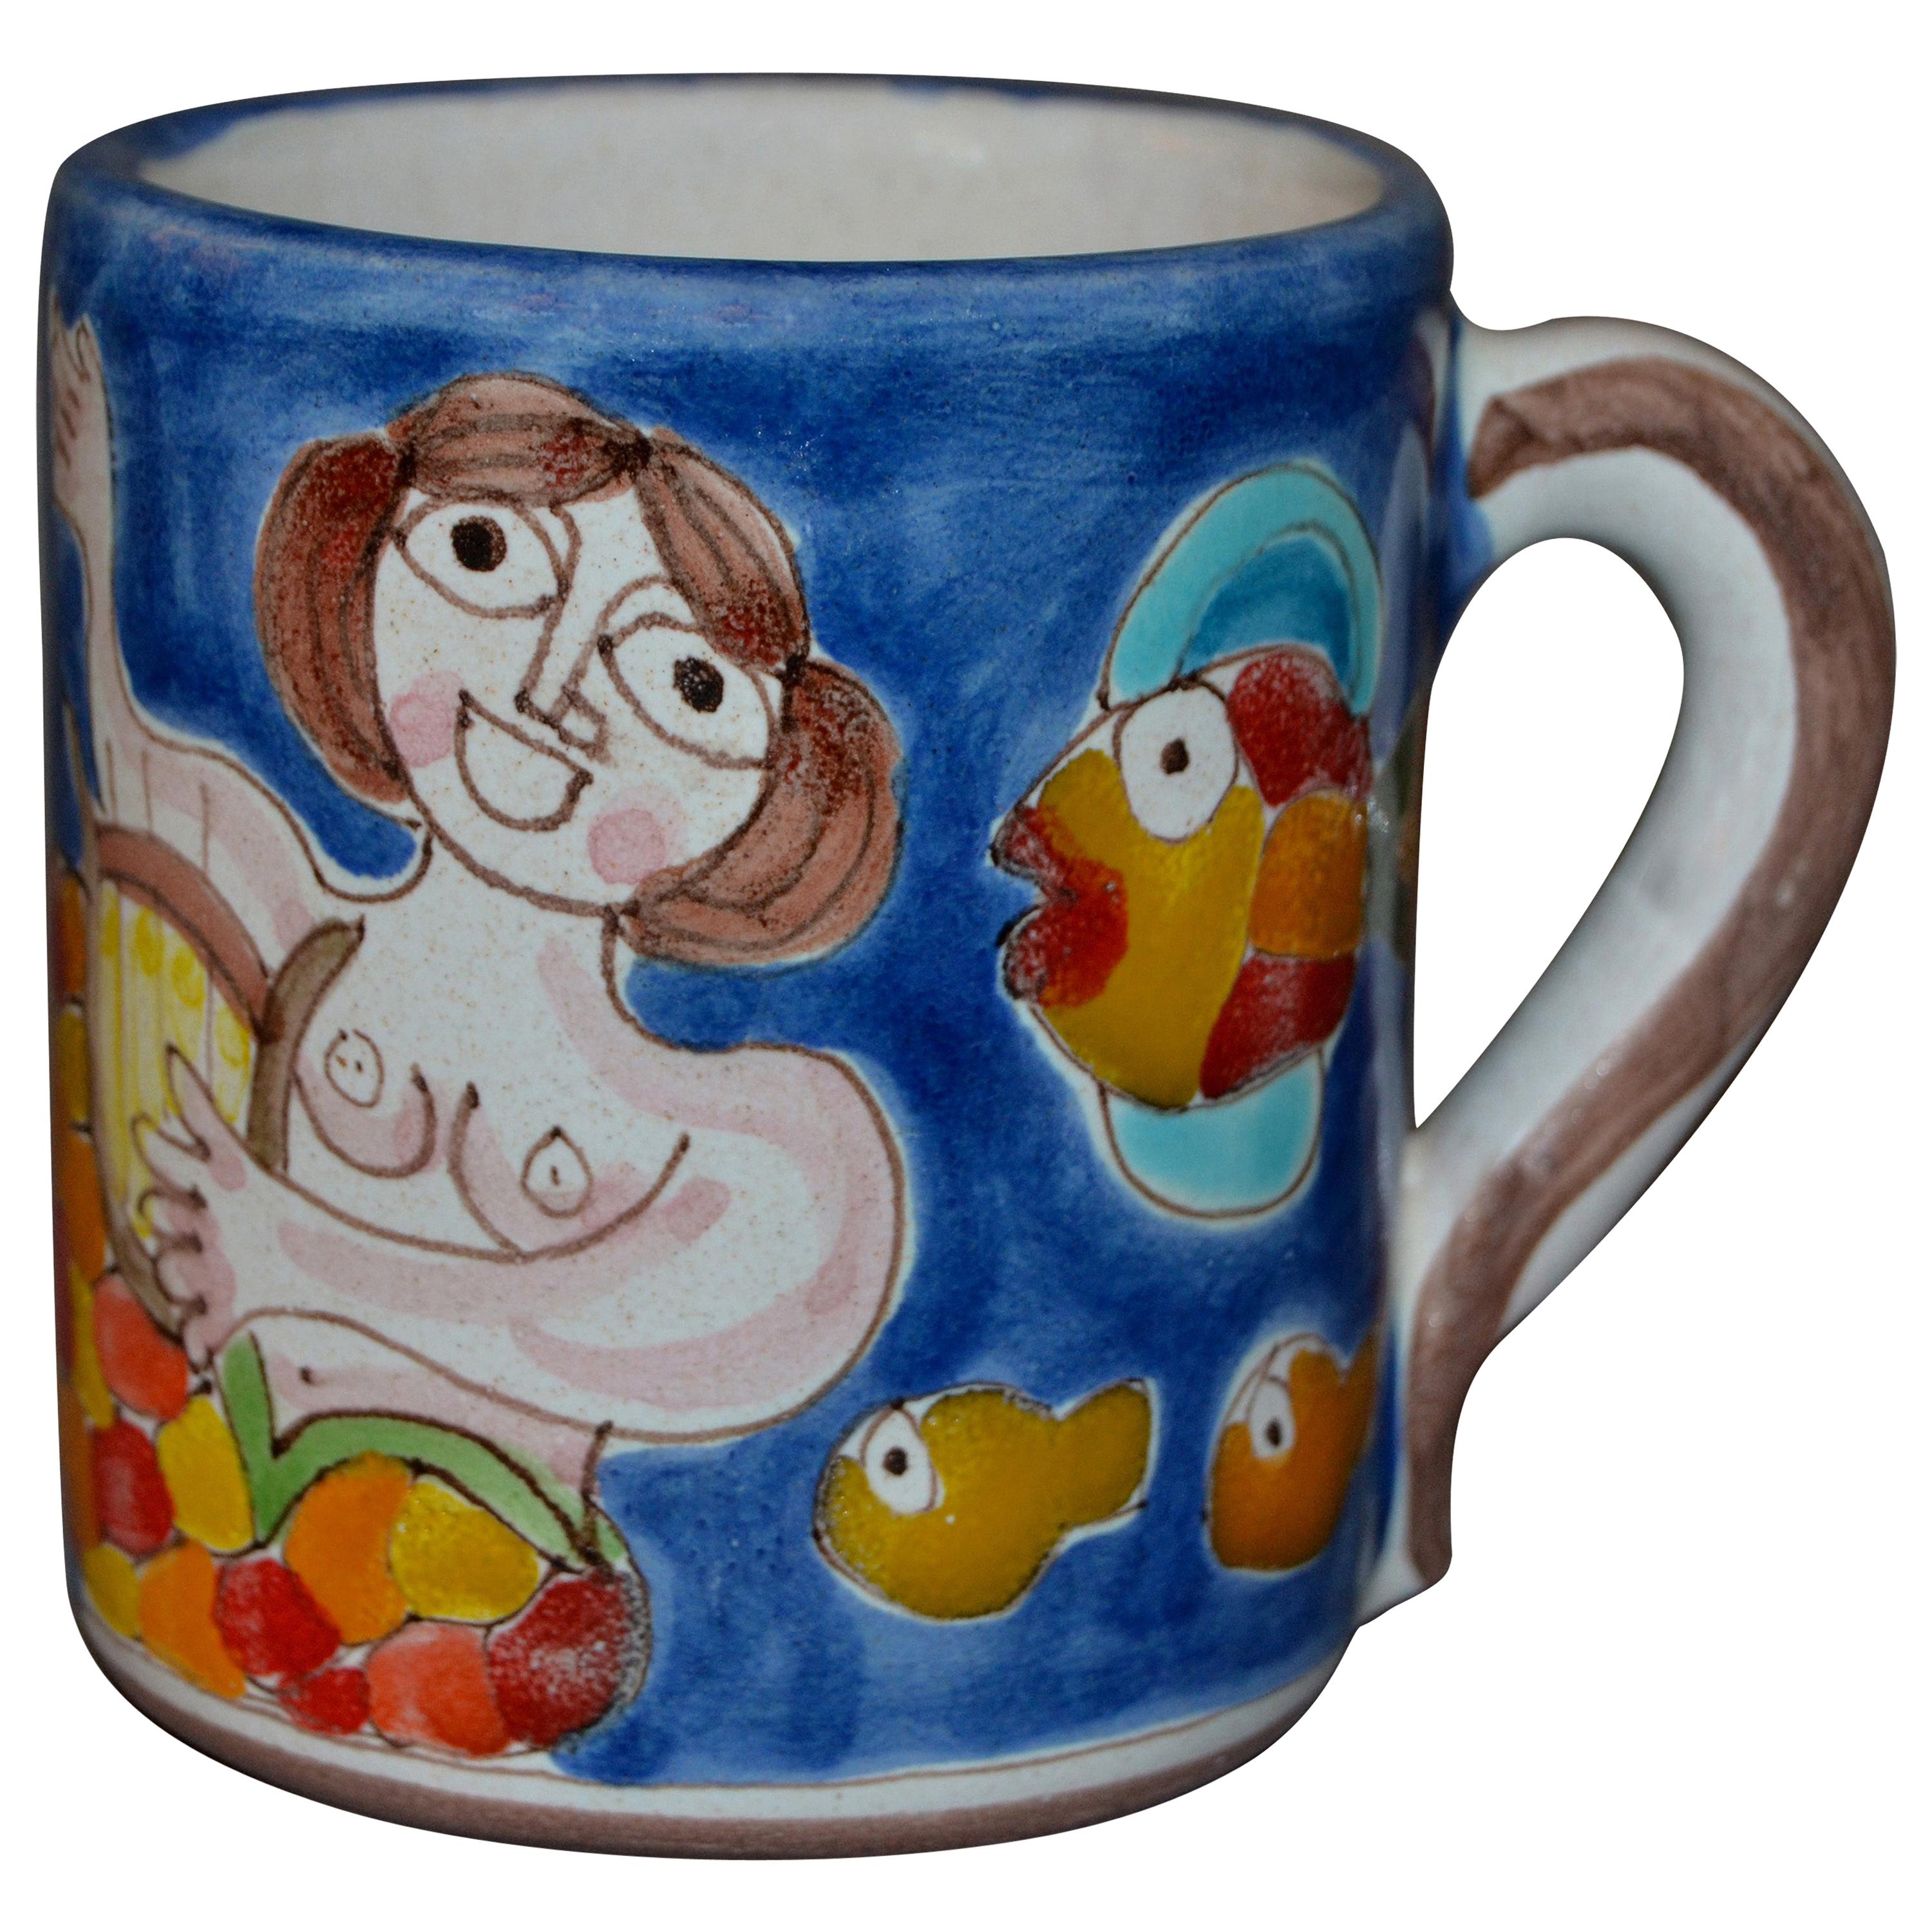 Italian Giovanni Desimone Hand Painted Art Pottery Decor Mug, Cup Mermaid & Harp